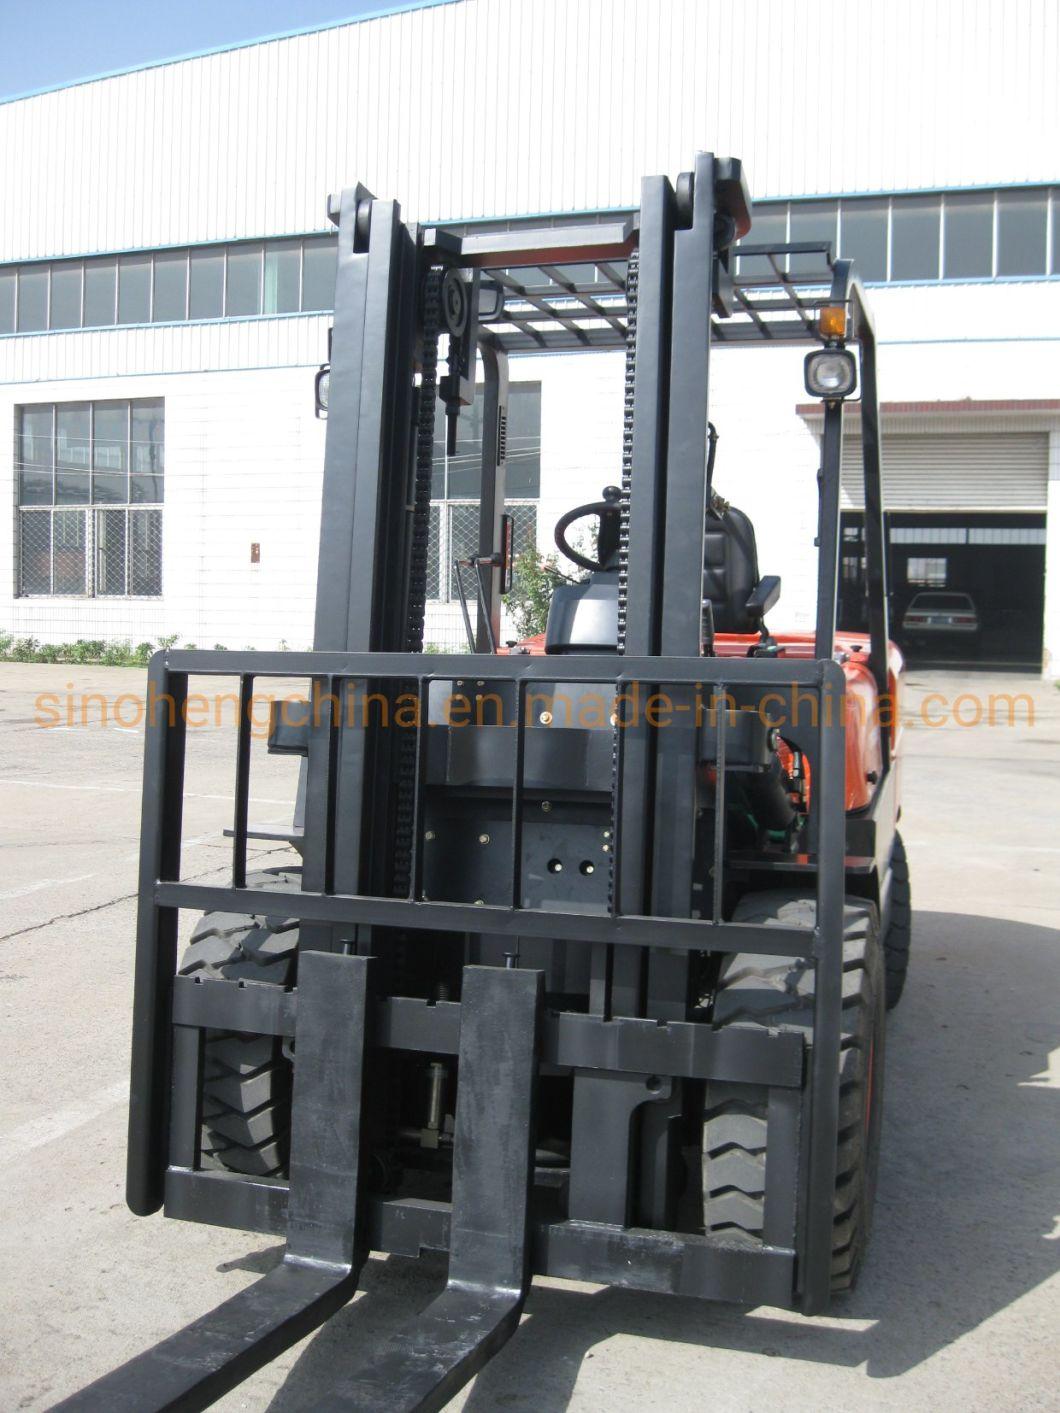 4 Ton Diesel Forklift, Lifting Equipment Sh40fr